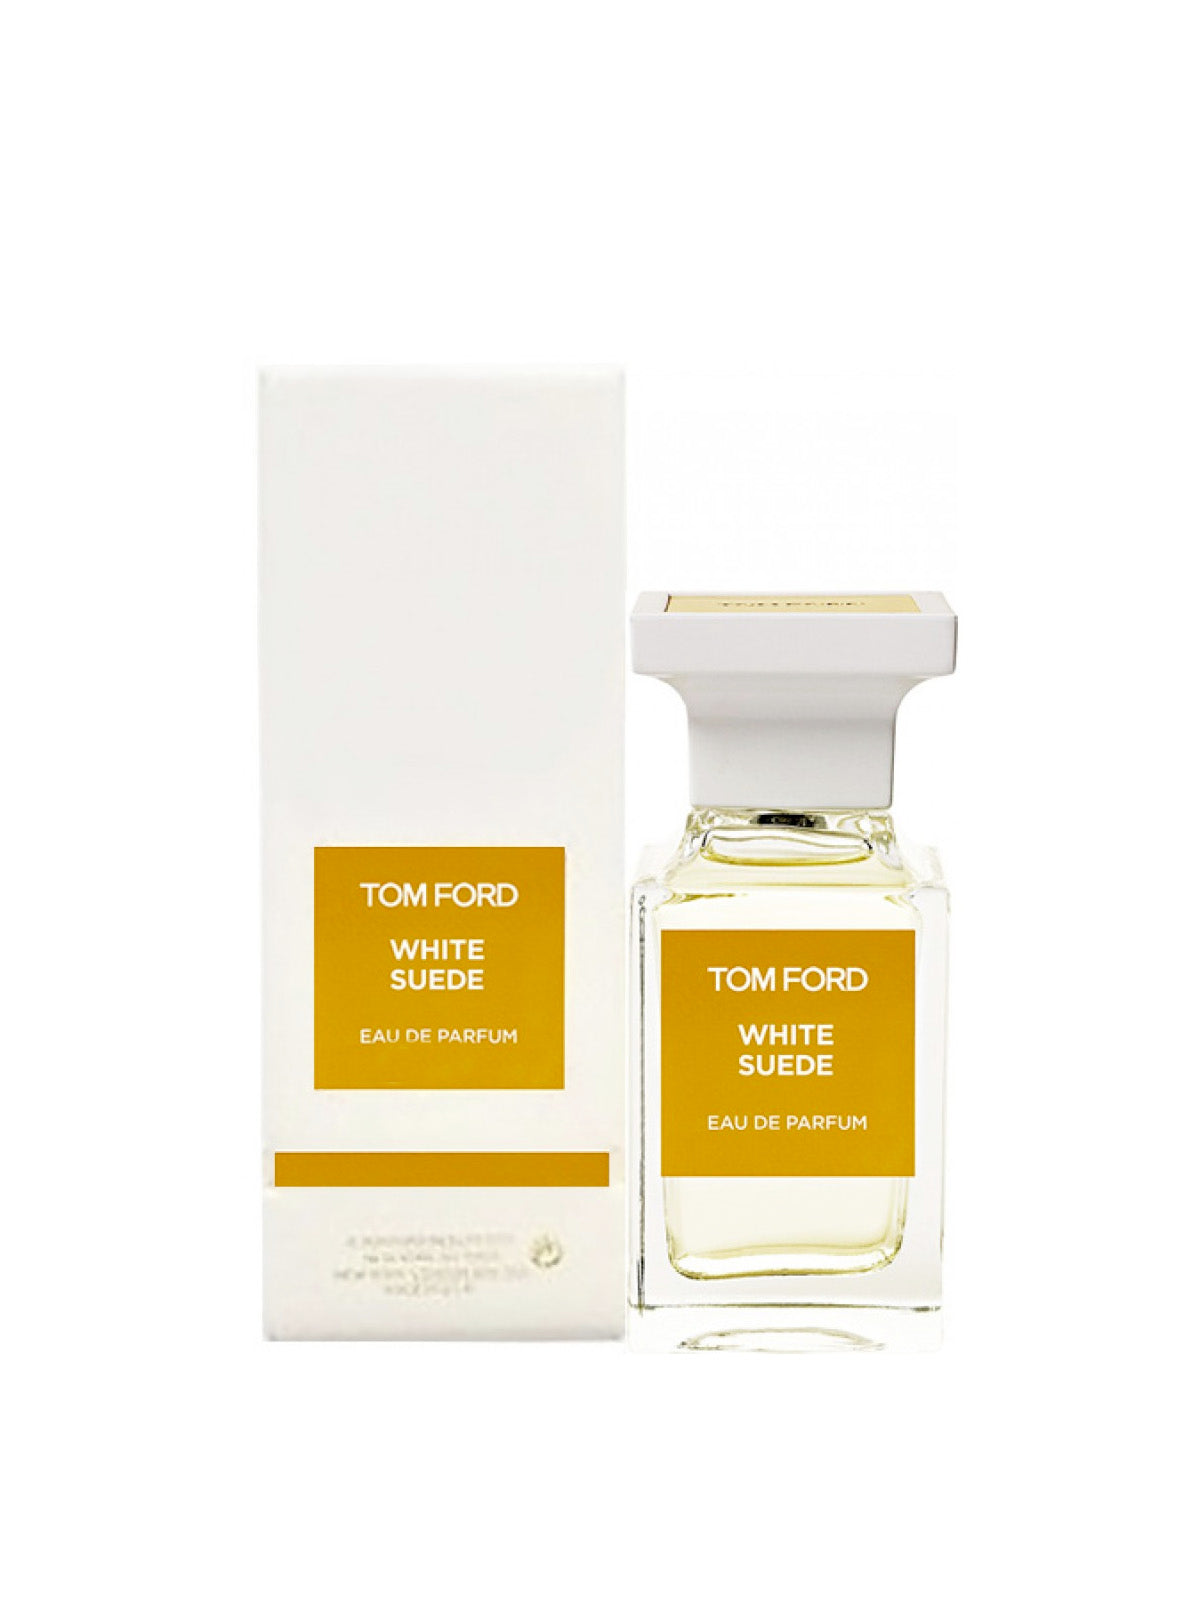 TOM FORD BEAUTY White Suede Eau De Parfum 100ml Beauty Lane Crawford |  